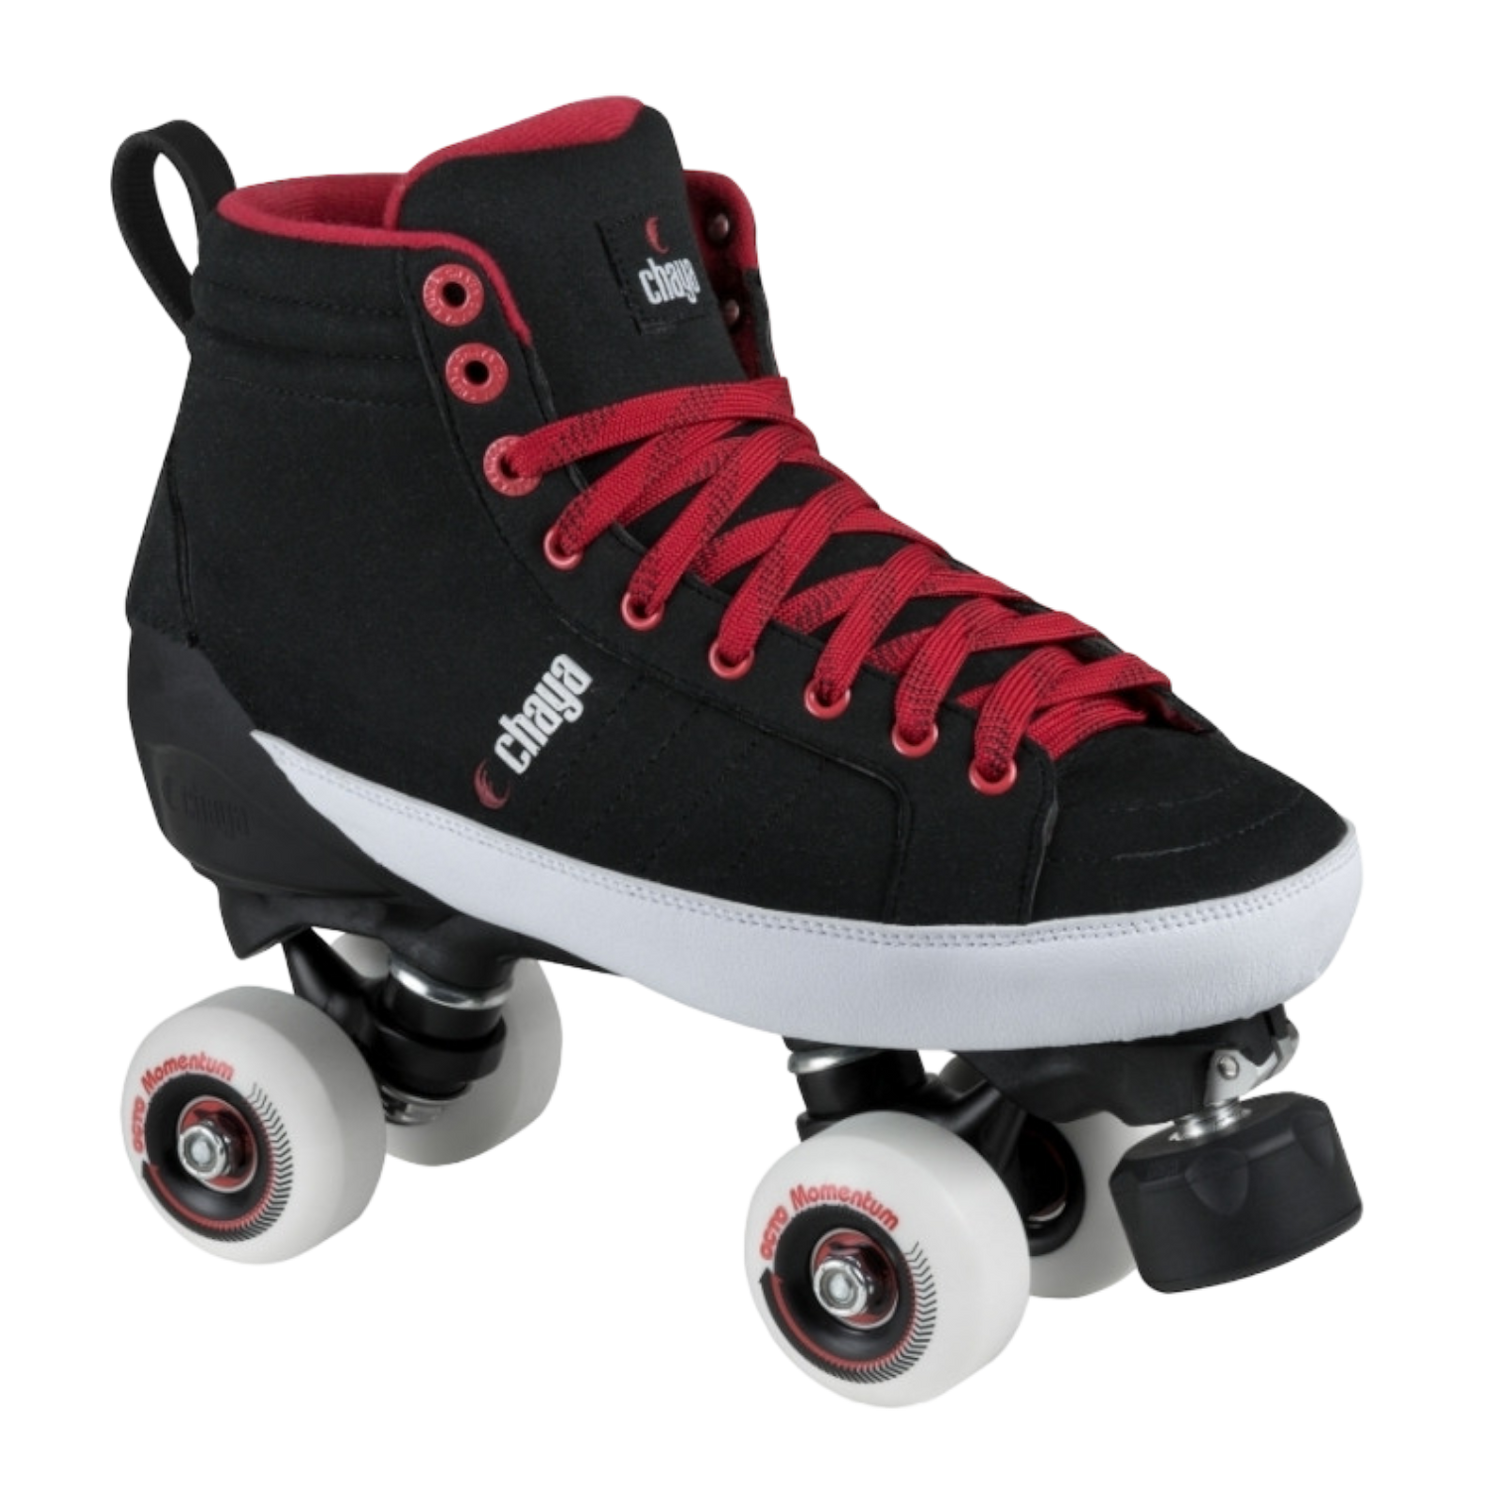 Chaya - Karma park roller skates (with out grind blocks)